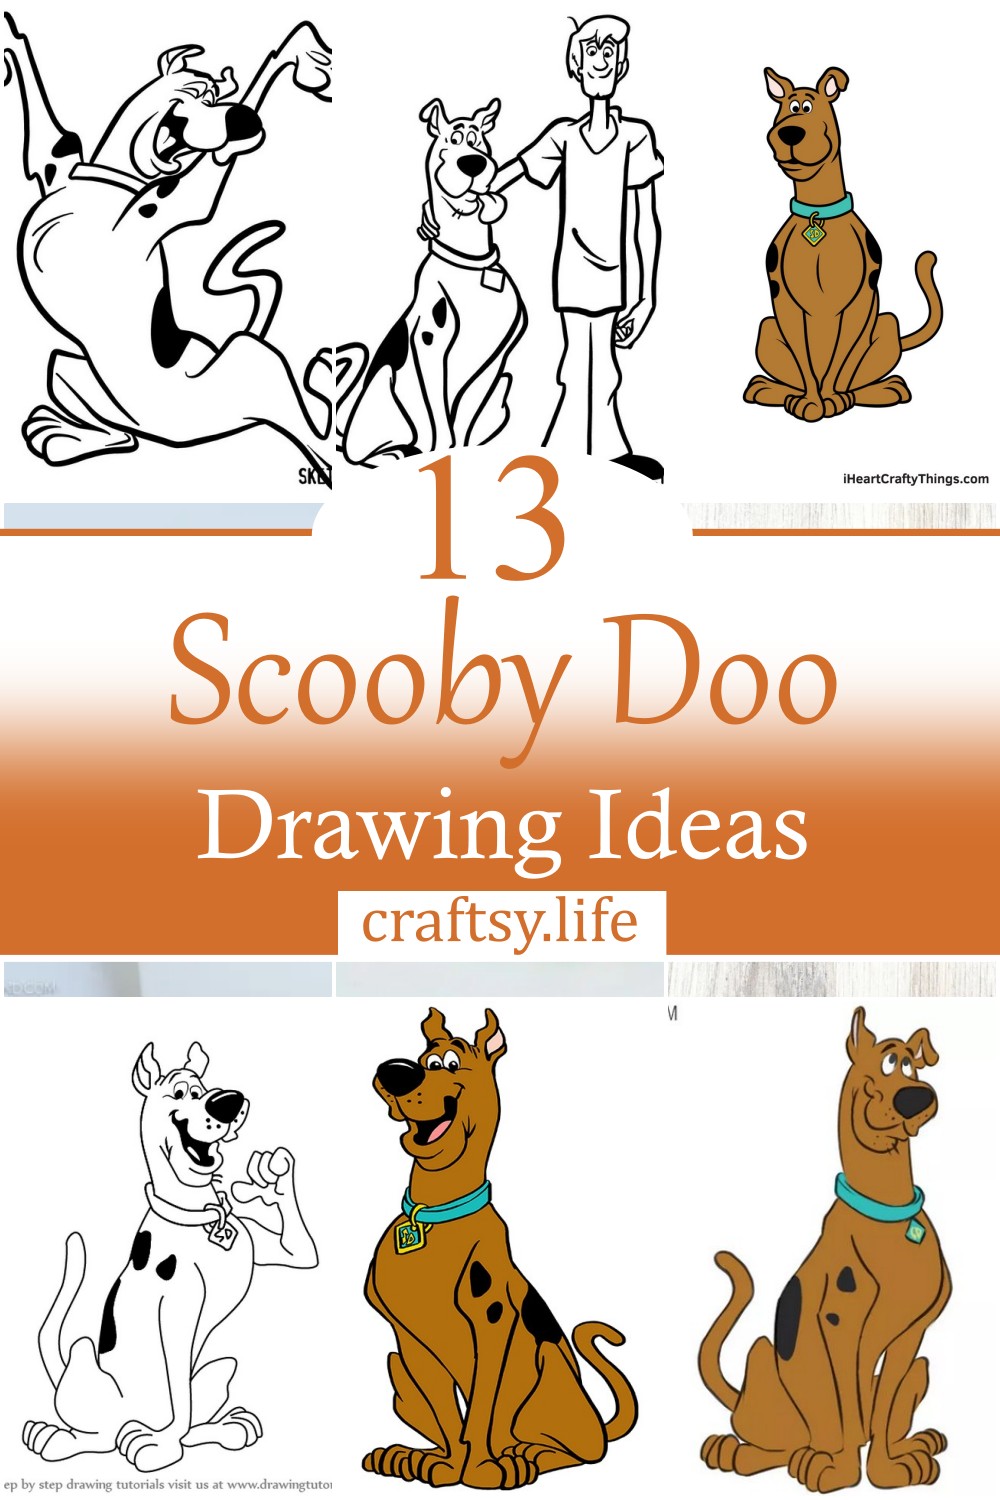 Scooby Doo Drawing Ideas